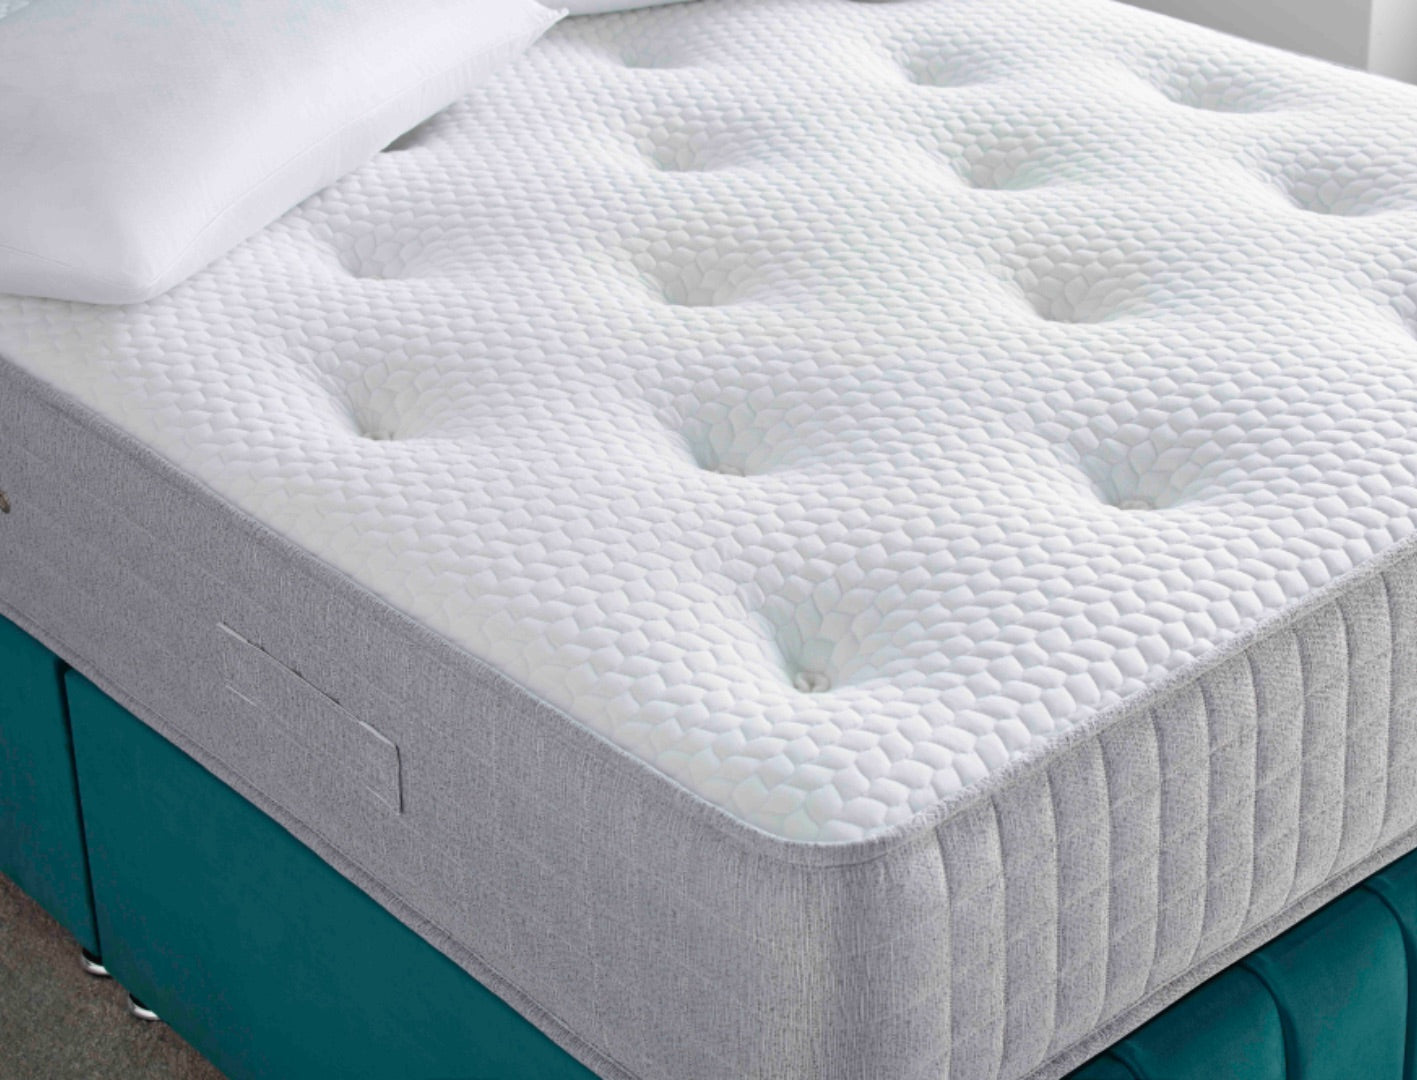 Giltedge Beds Comfy One Orthopaedic Backcare Mattress